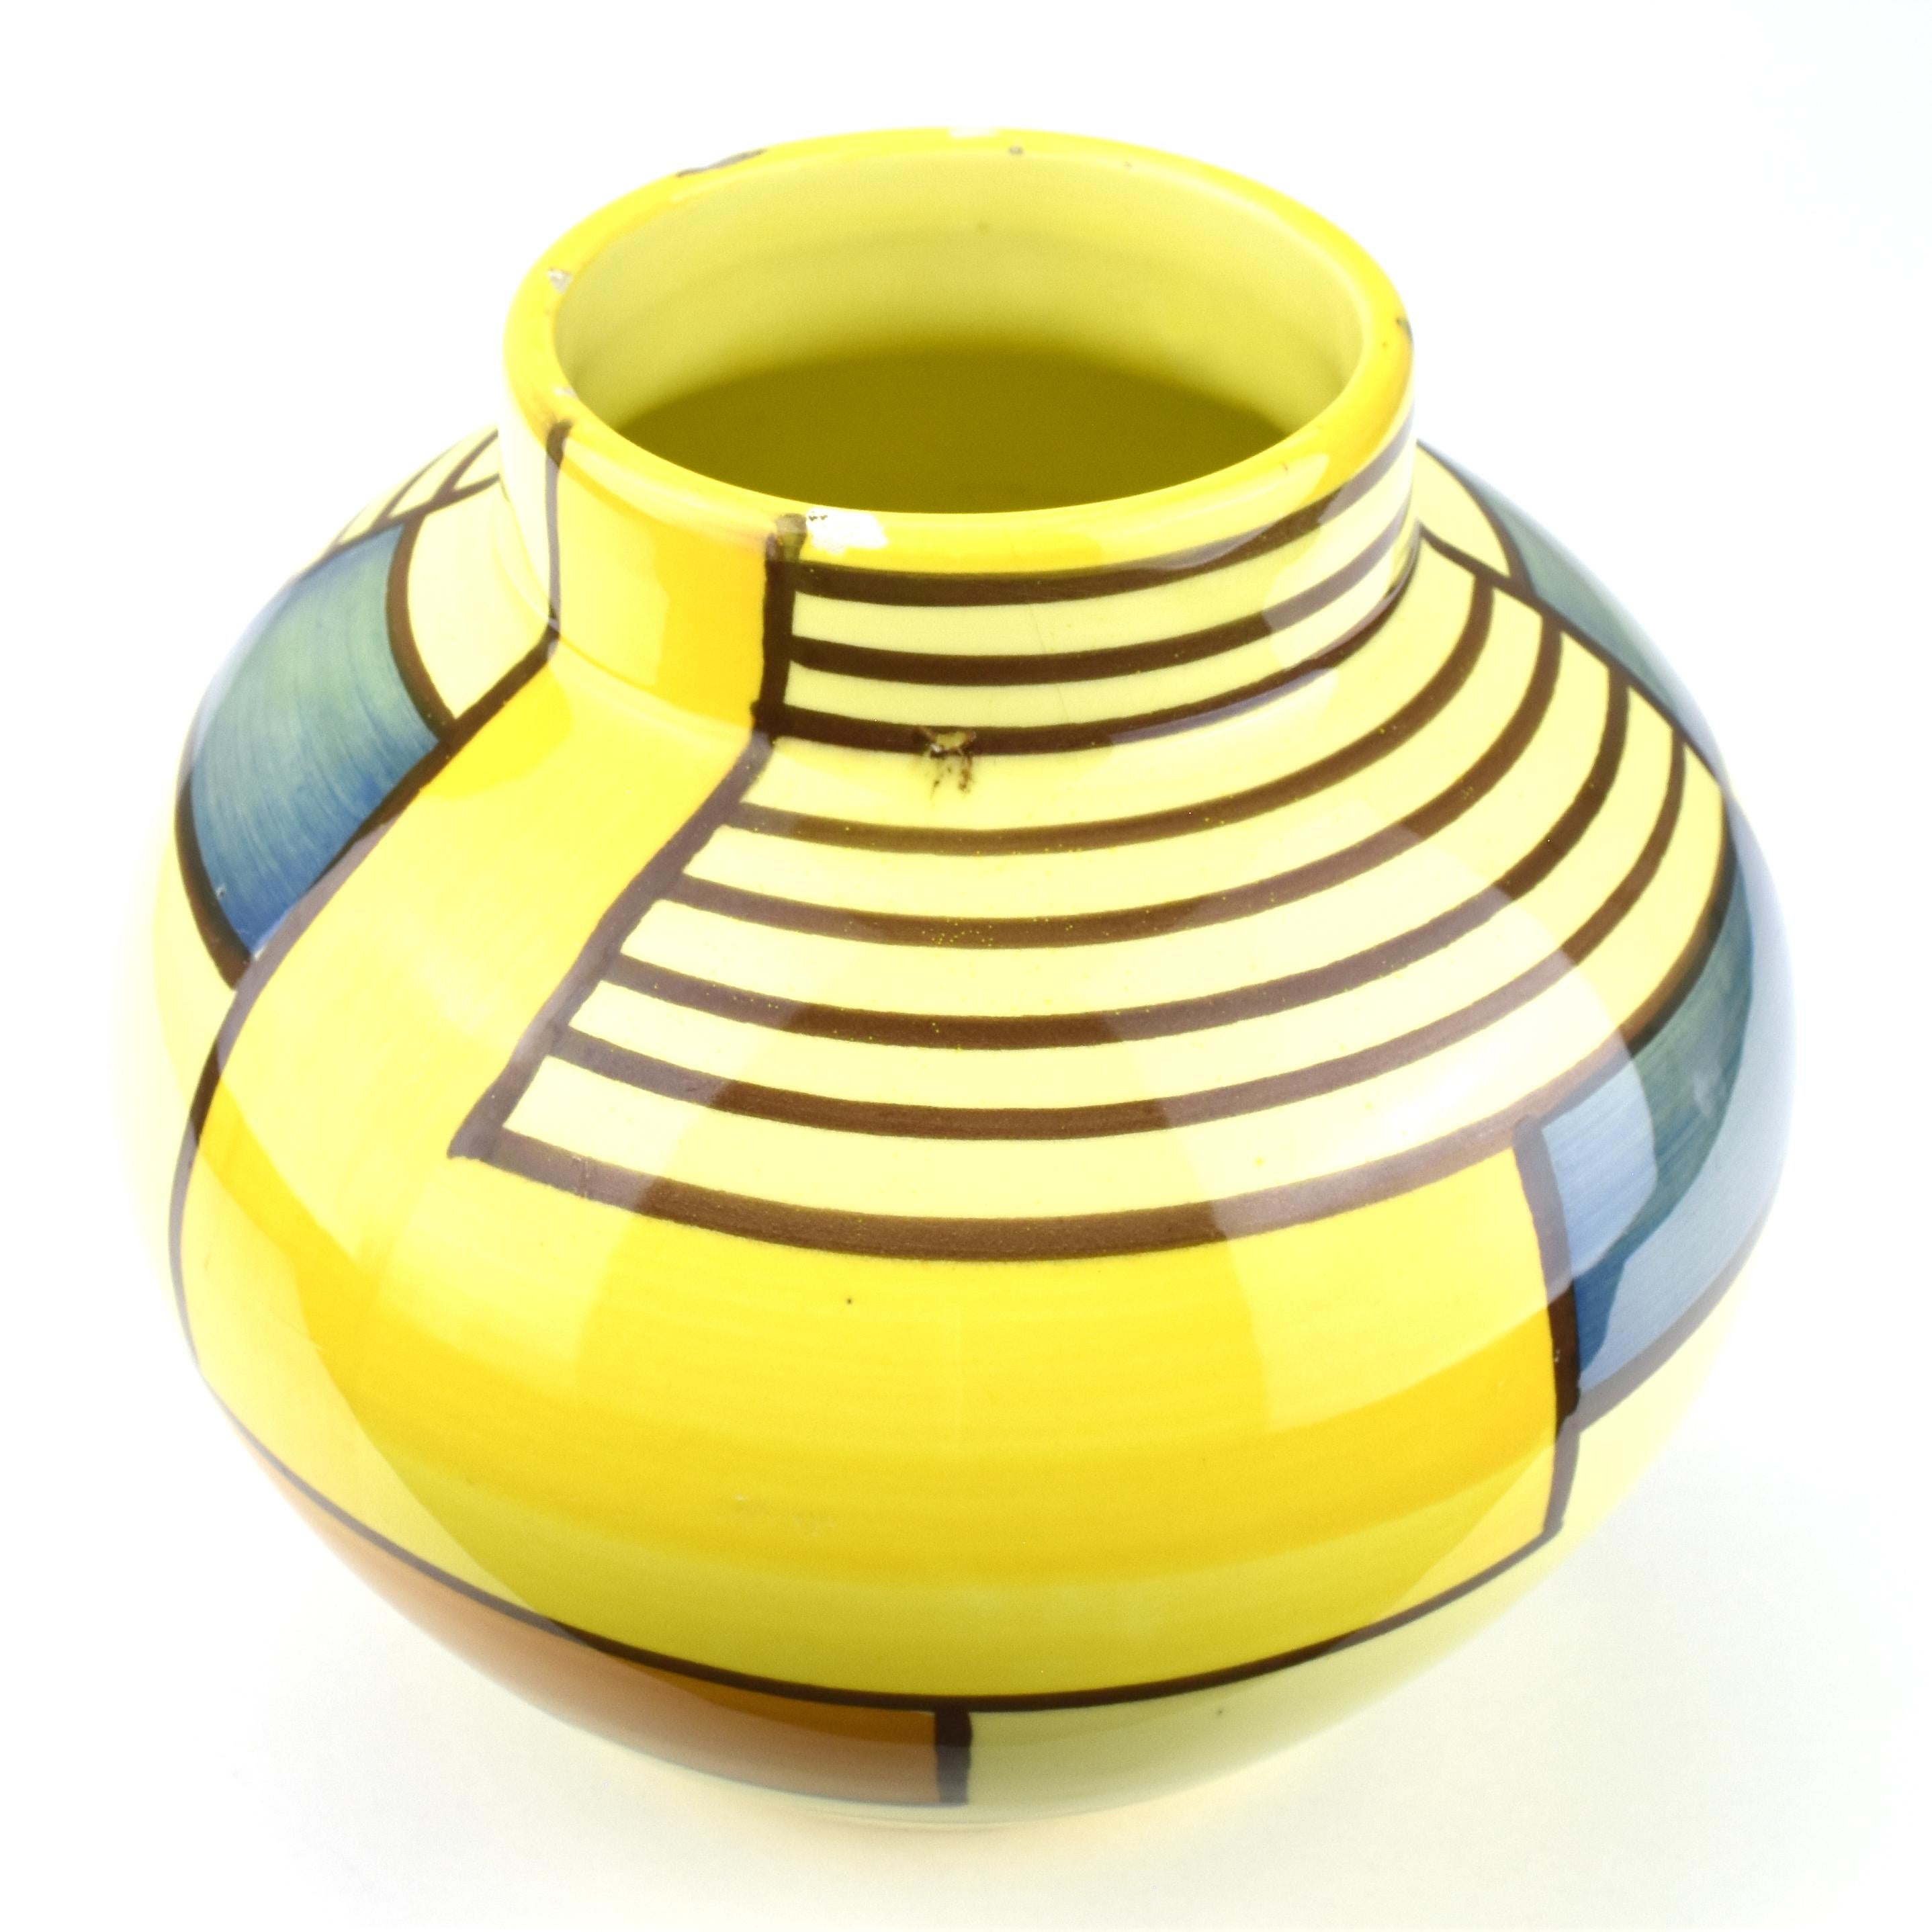 Early 20th Century Schramberg Eva Zeisel Mondrian Majolica Ceramic Vase Art Deco Bauhaus Era For Sale